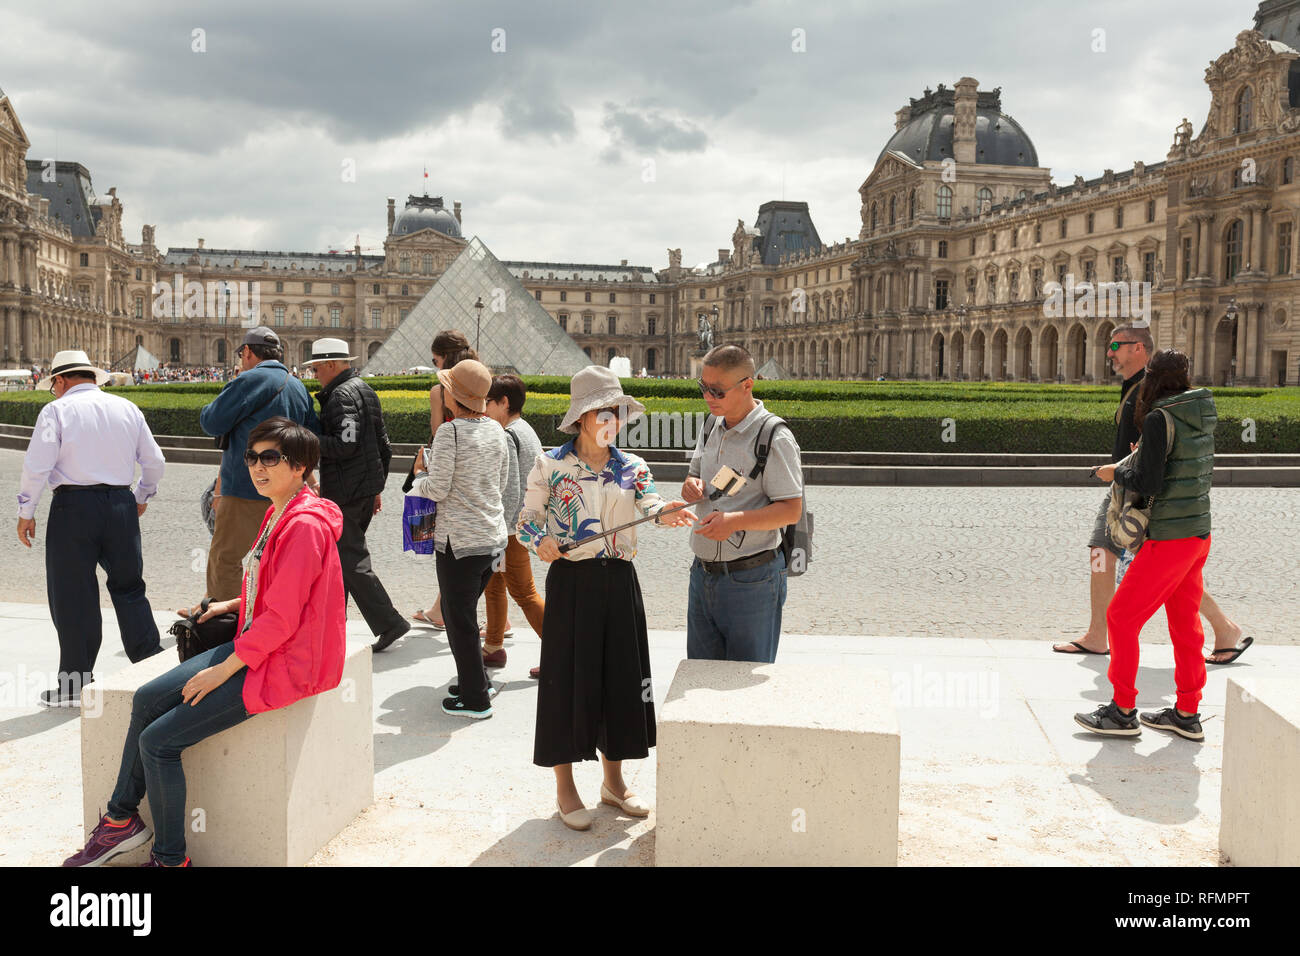 Франция 1 июня. Селфи на фоне Лувра. Праздник в Лувре на улице. Фотографии туристов Лувр. Фото двух людей на фоне Лувра.